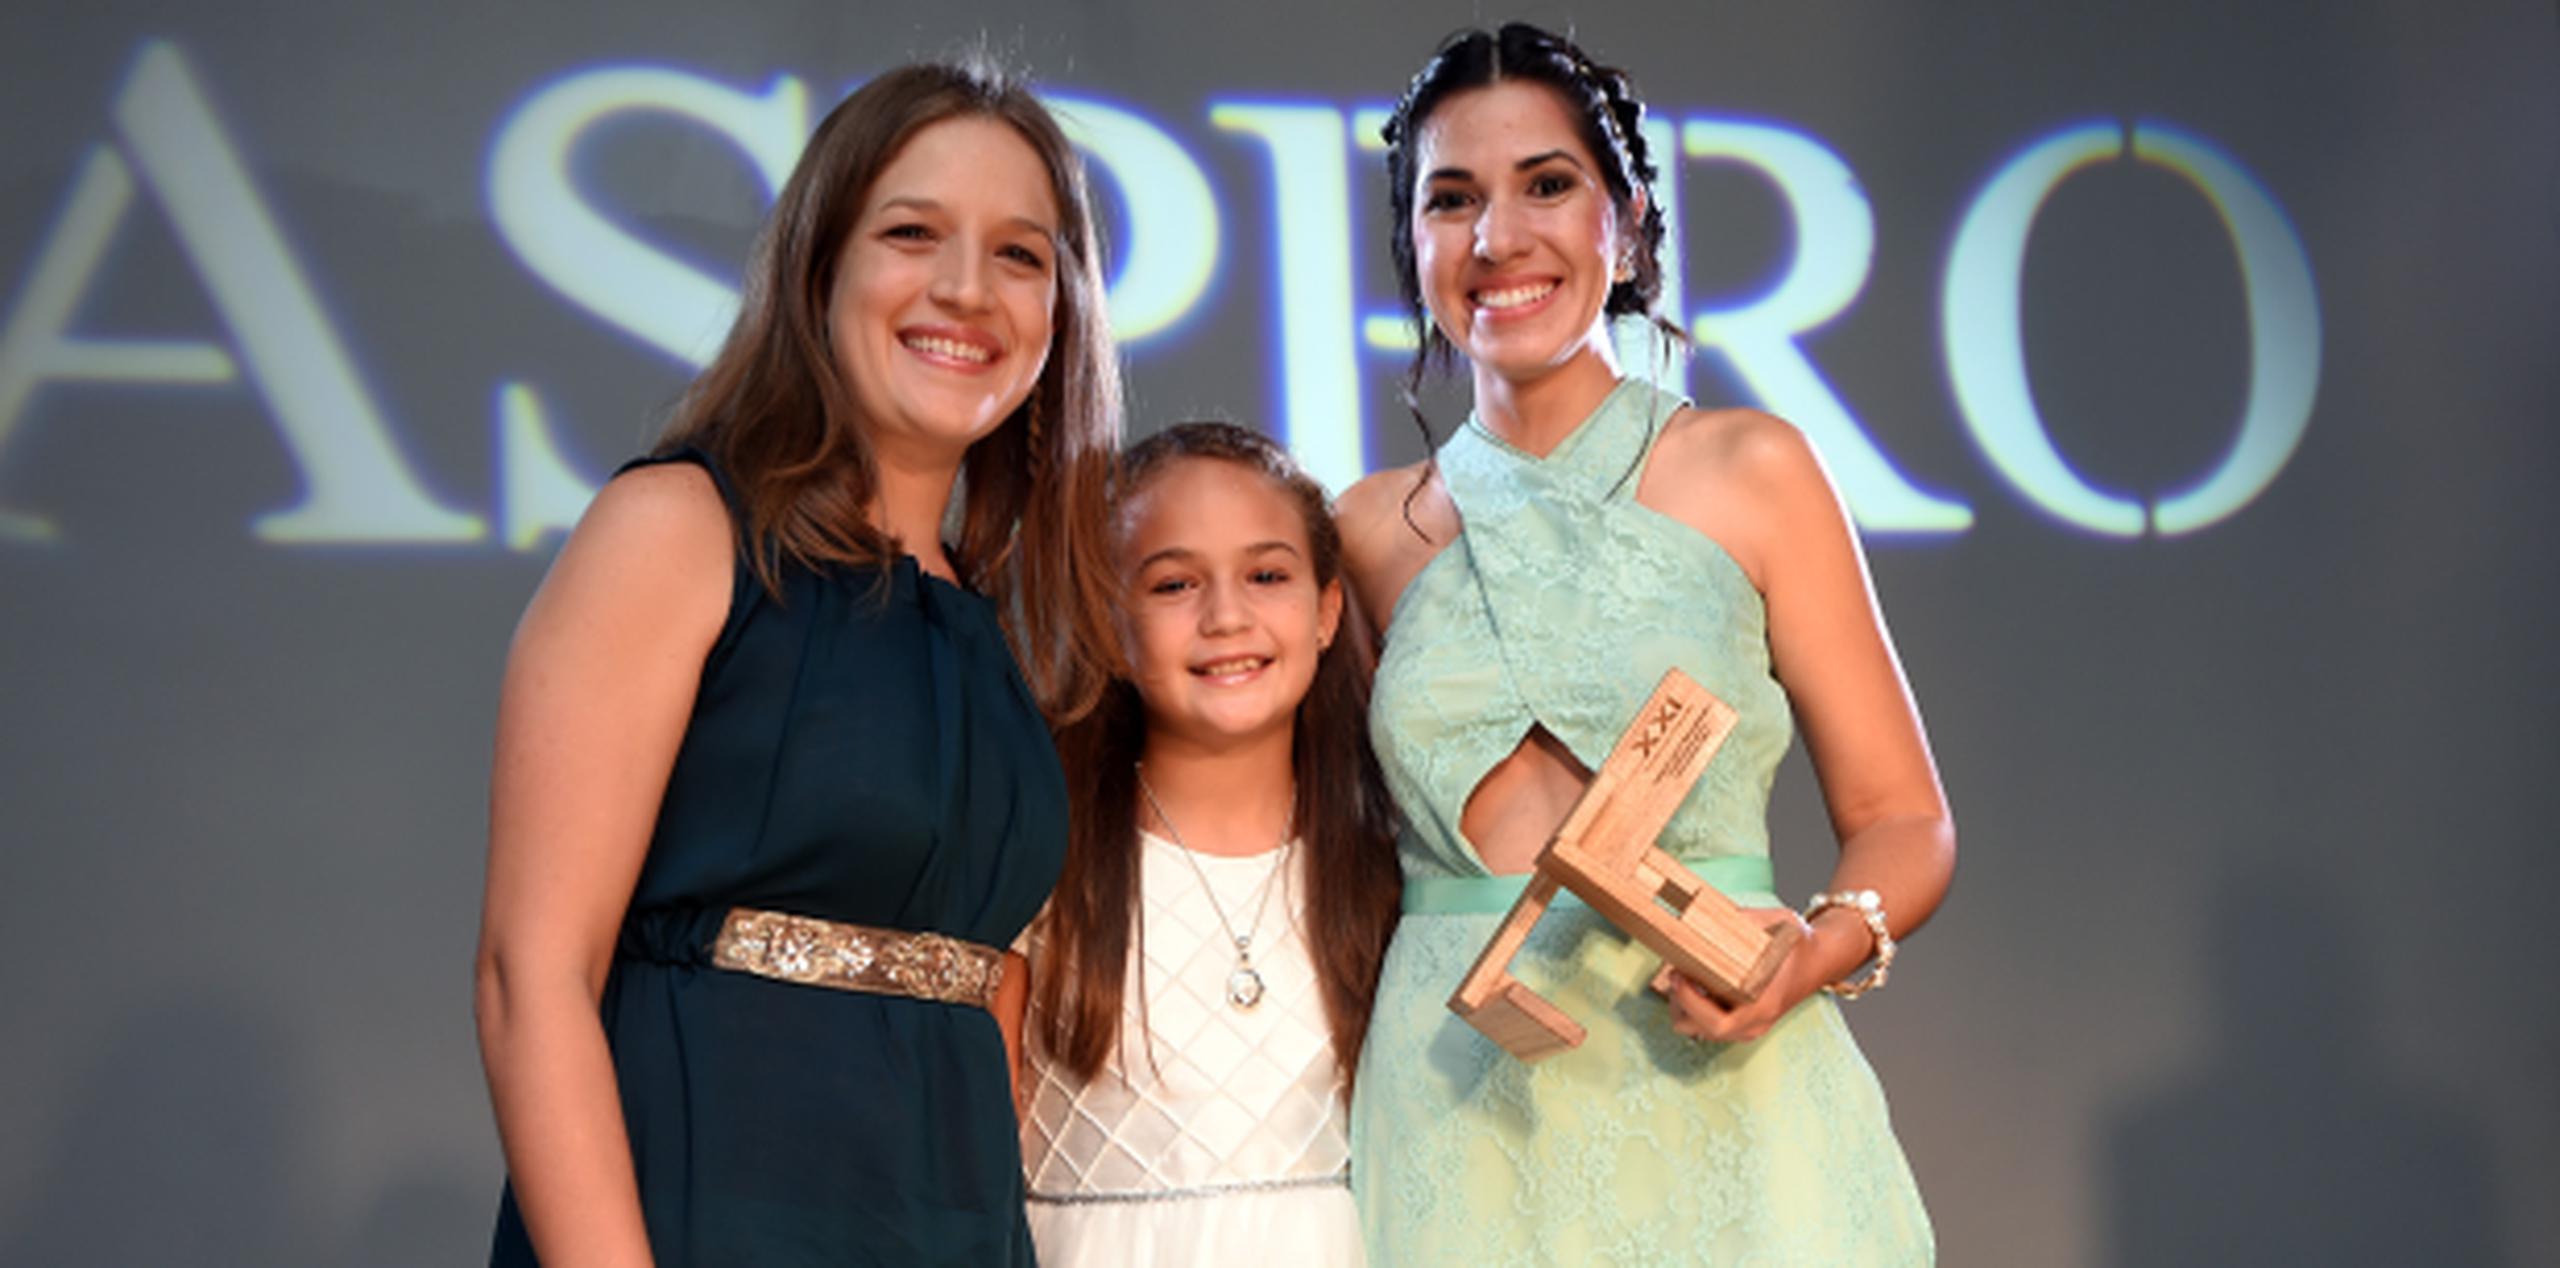 El premio Periodista Joven del Año de la Fundación Laura Rivera Meléndez fue otorgado a la reportera Cristina del Mar Quiles. (andre.kang@gfrmedia.com)